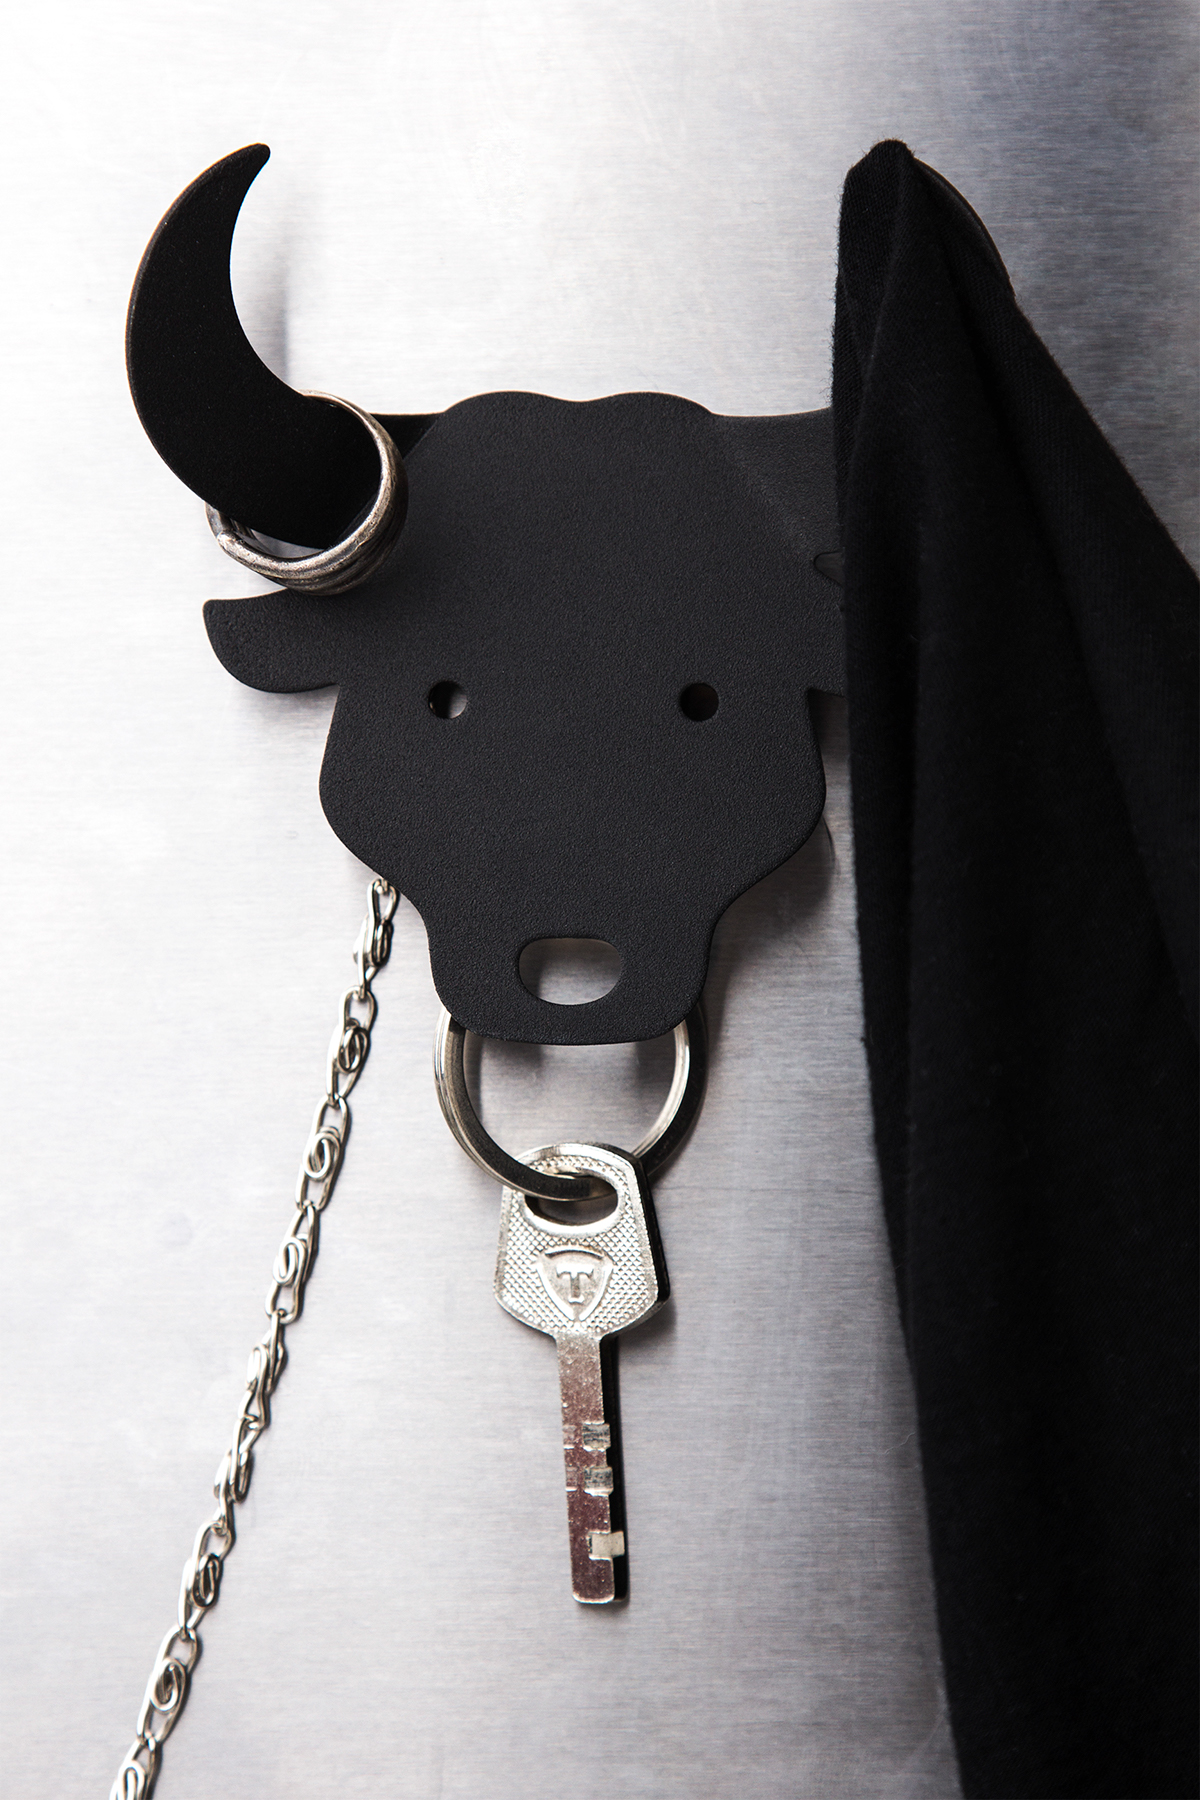 metal sheet design lifestyle product industrial designer key holder accessory holer Hang holder metal animal deer bull